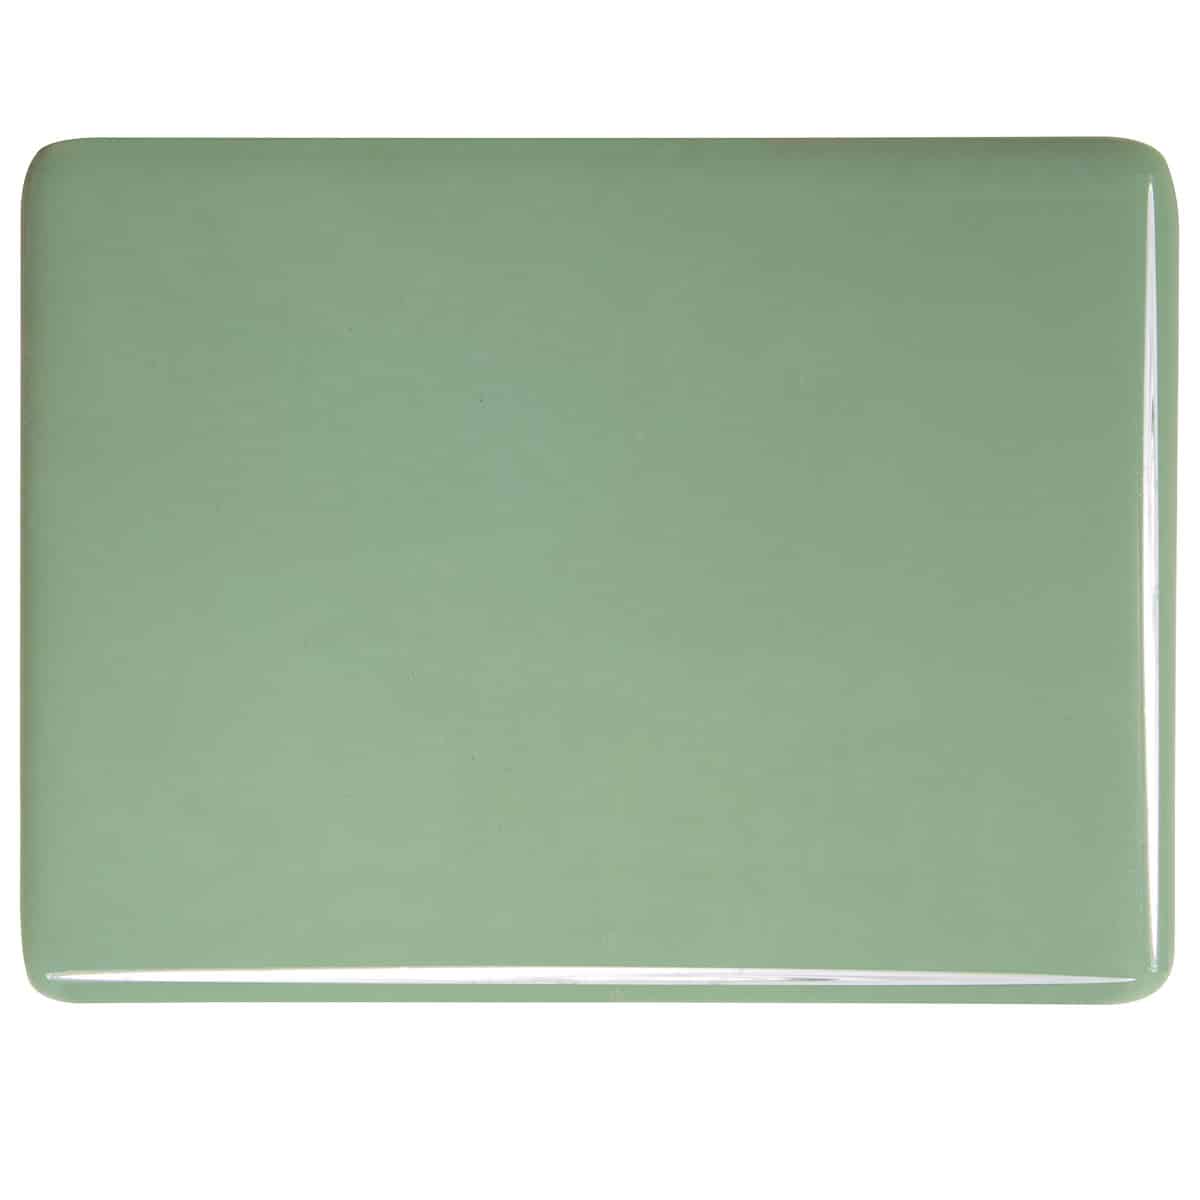 000207 Celadon Green Opalescent